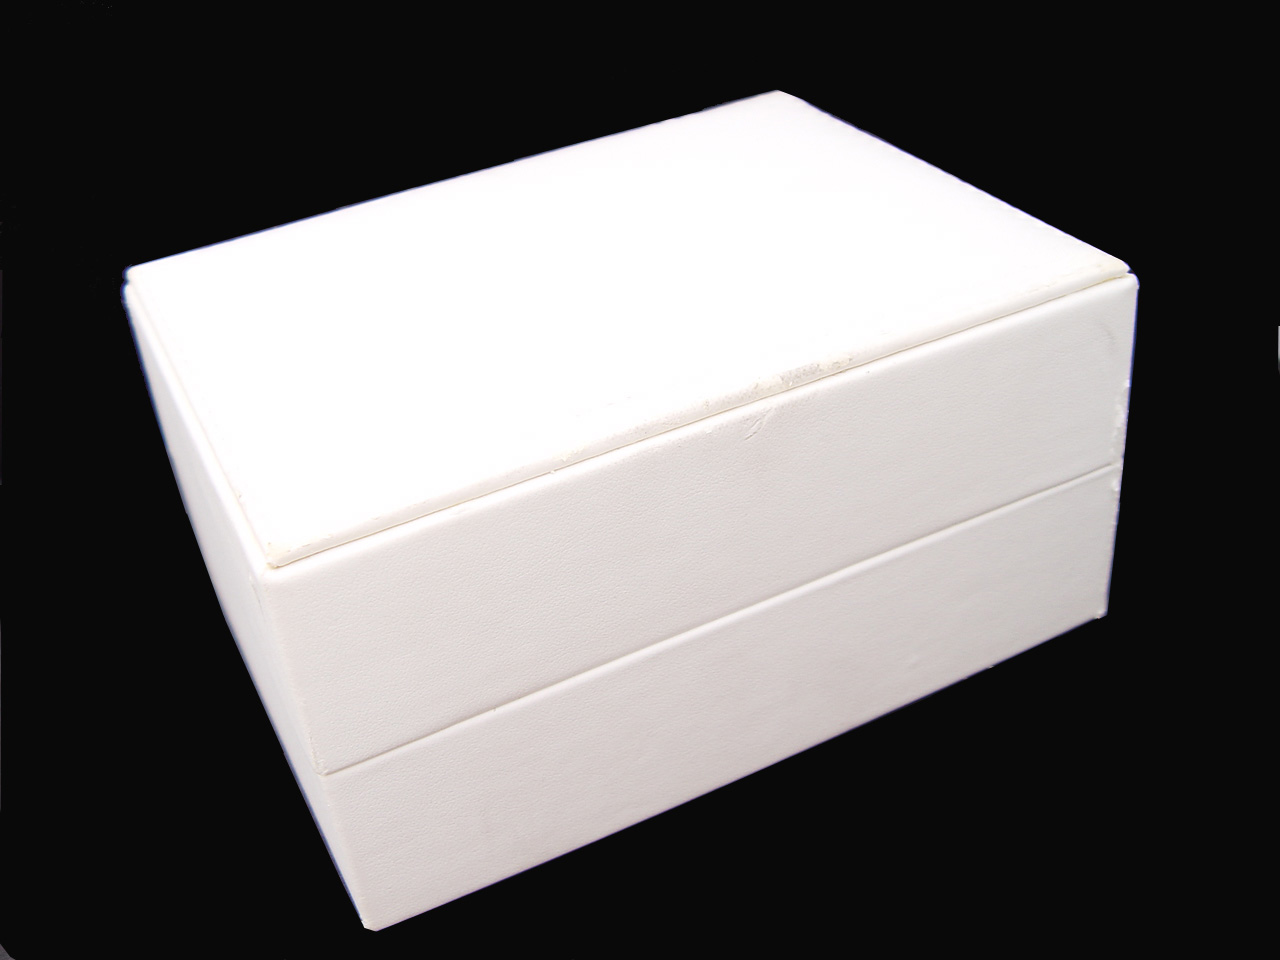 (IWC-BOX-02) IWC Authentic Vintage Watch Box, White